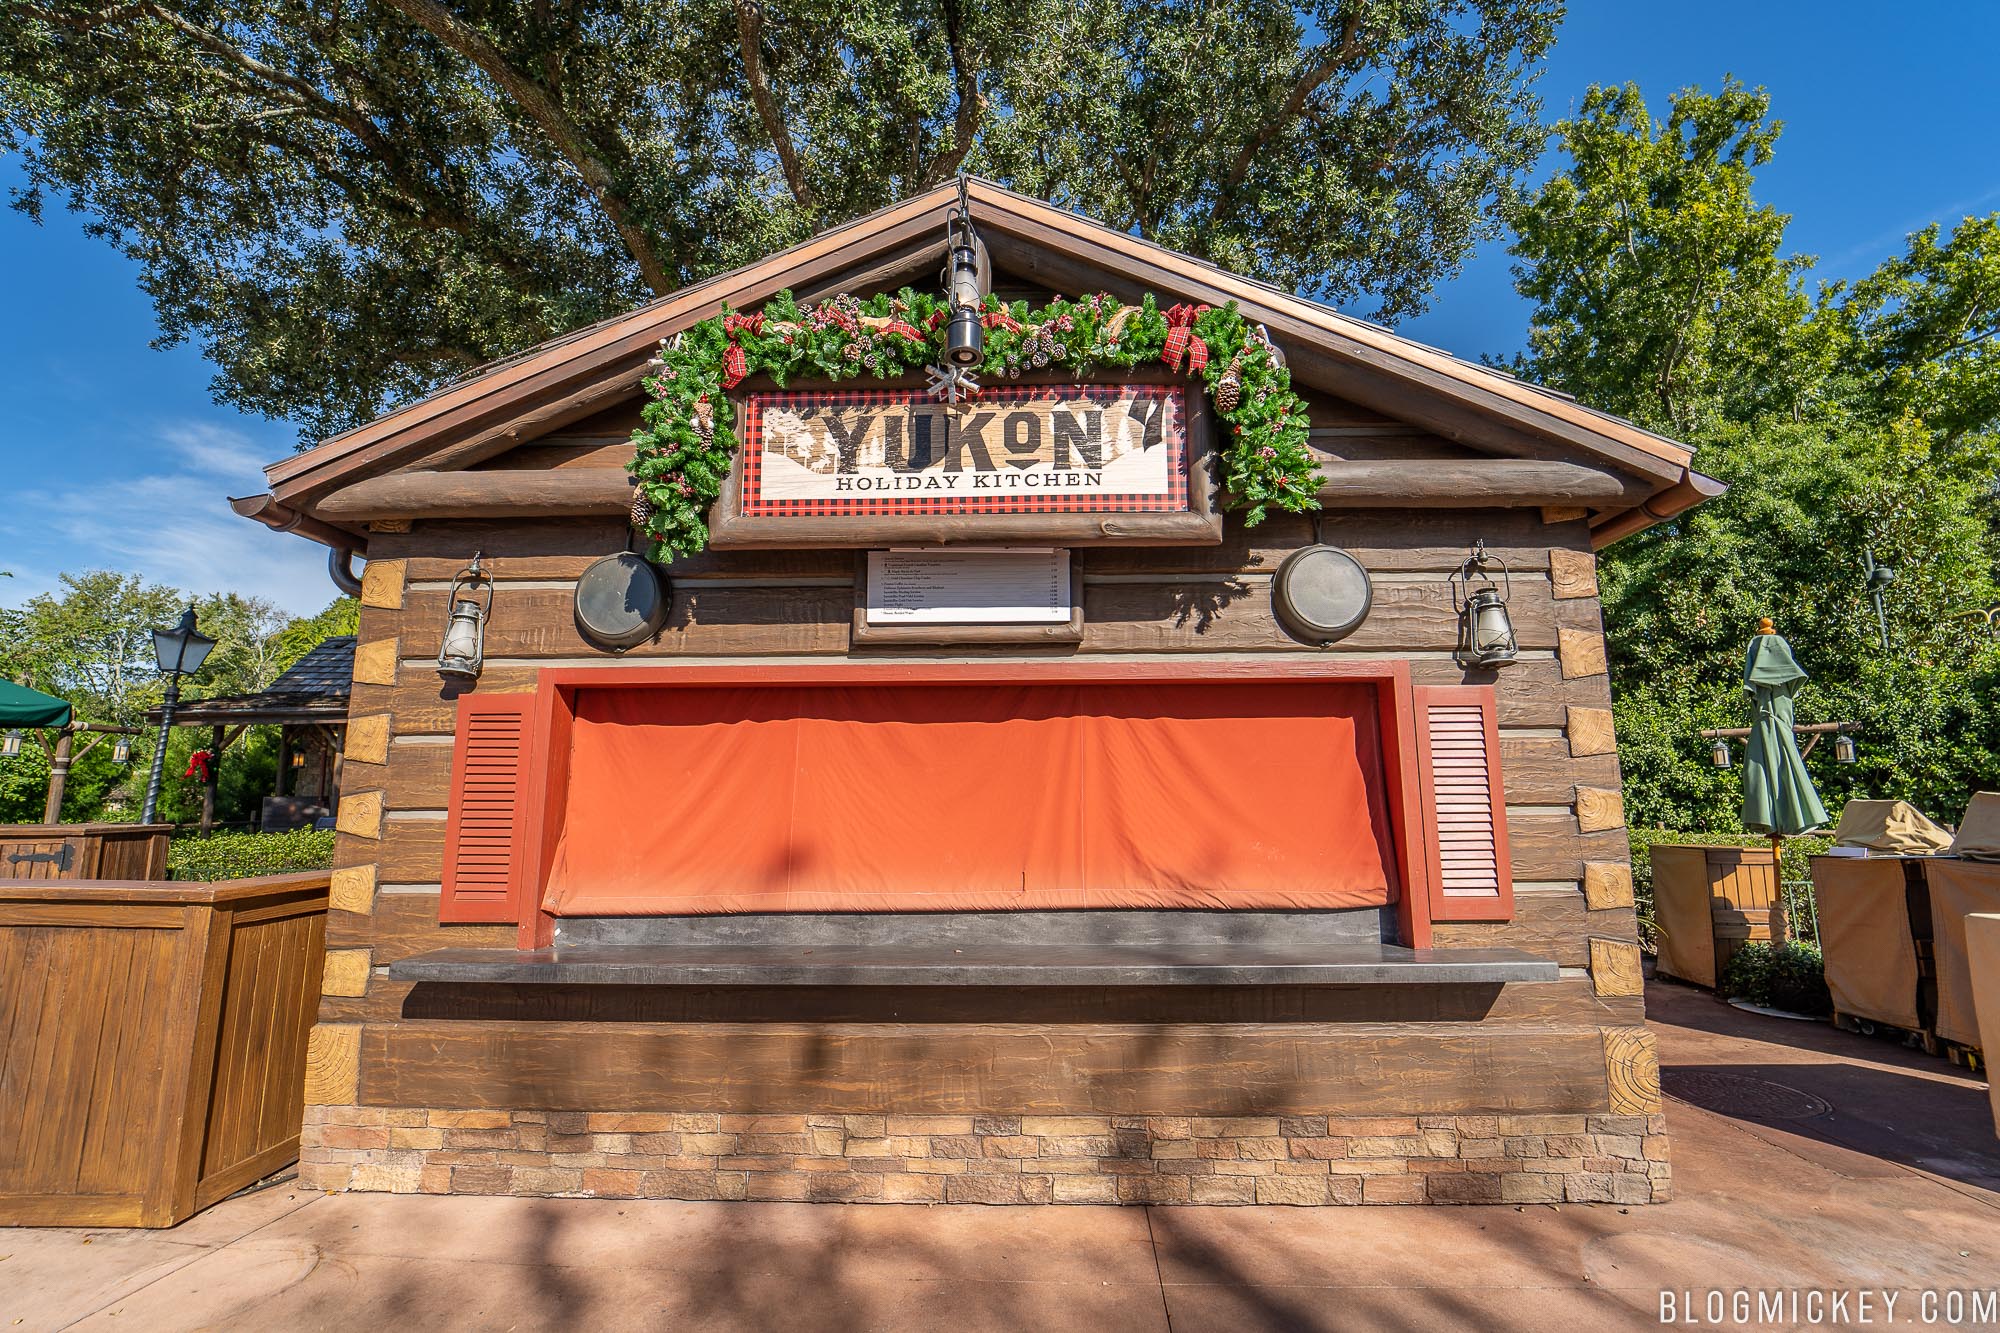 Review Yukon Holiday Kitchen Epcot International Festival Of The Holidays 2018